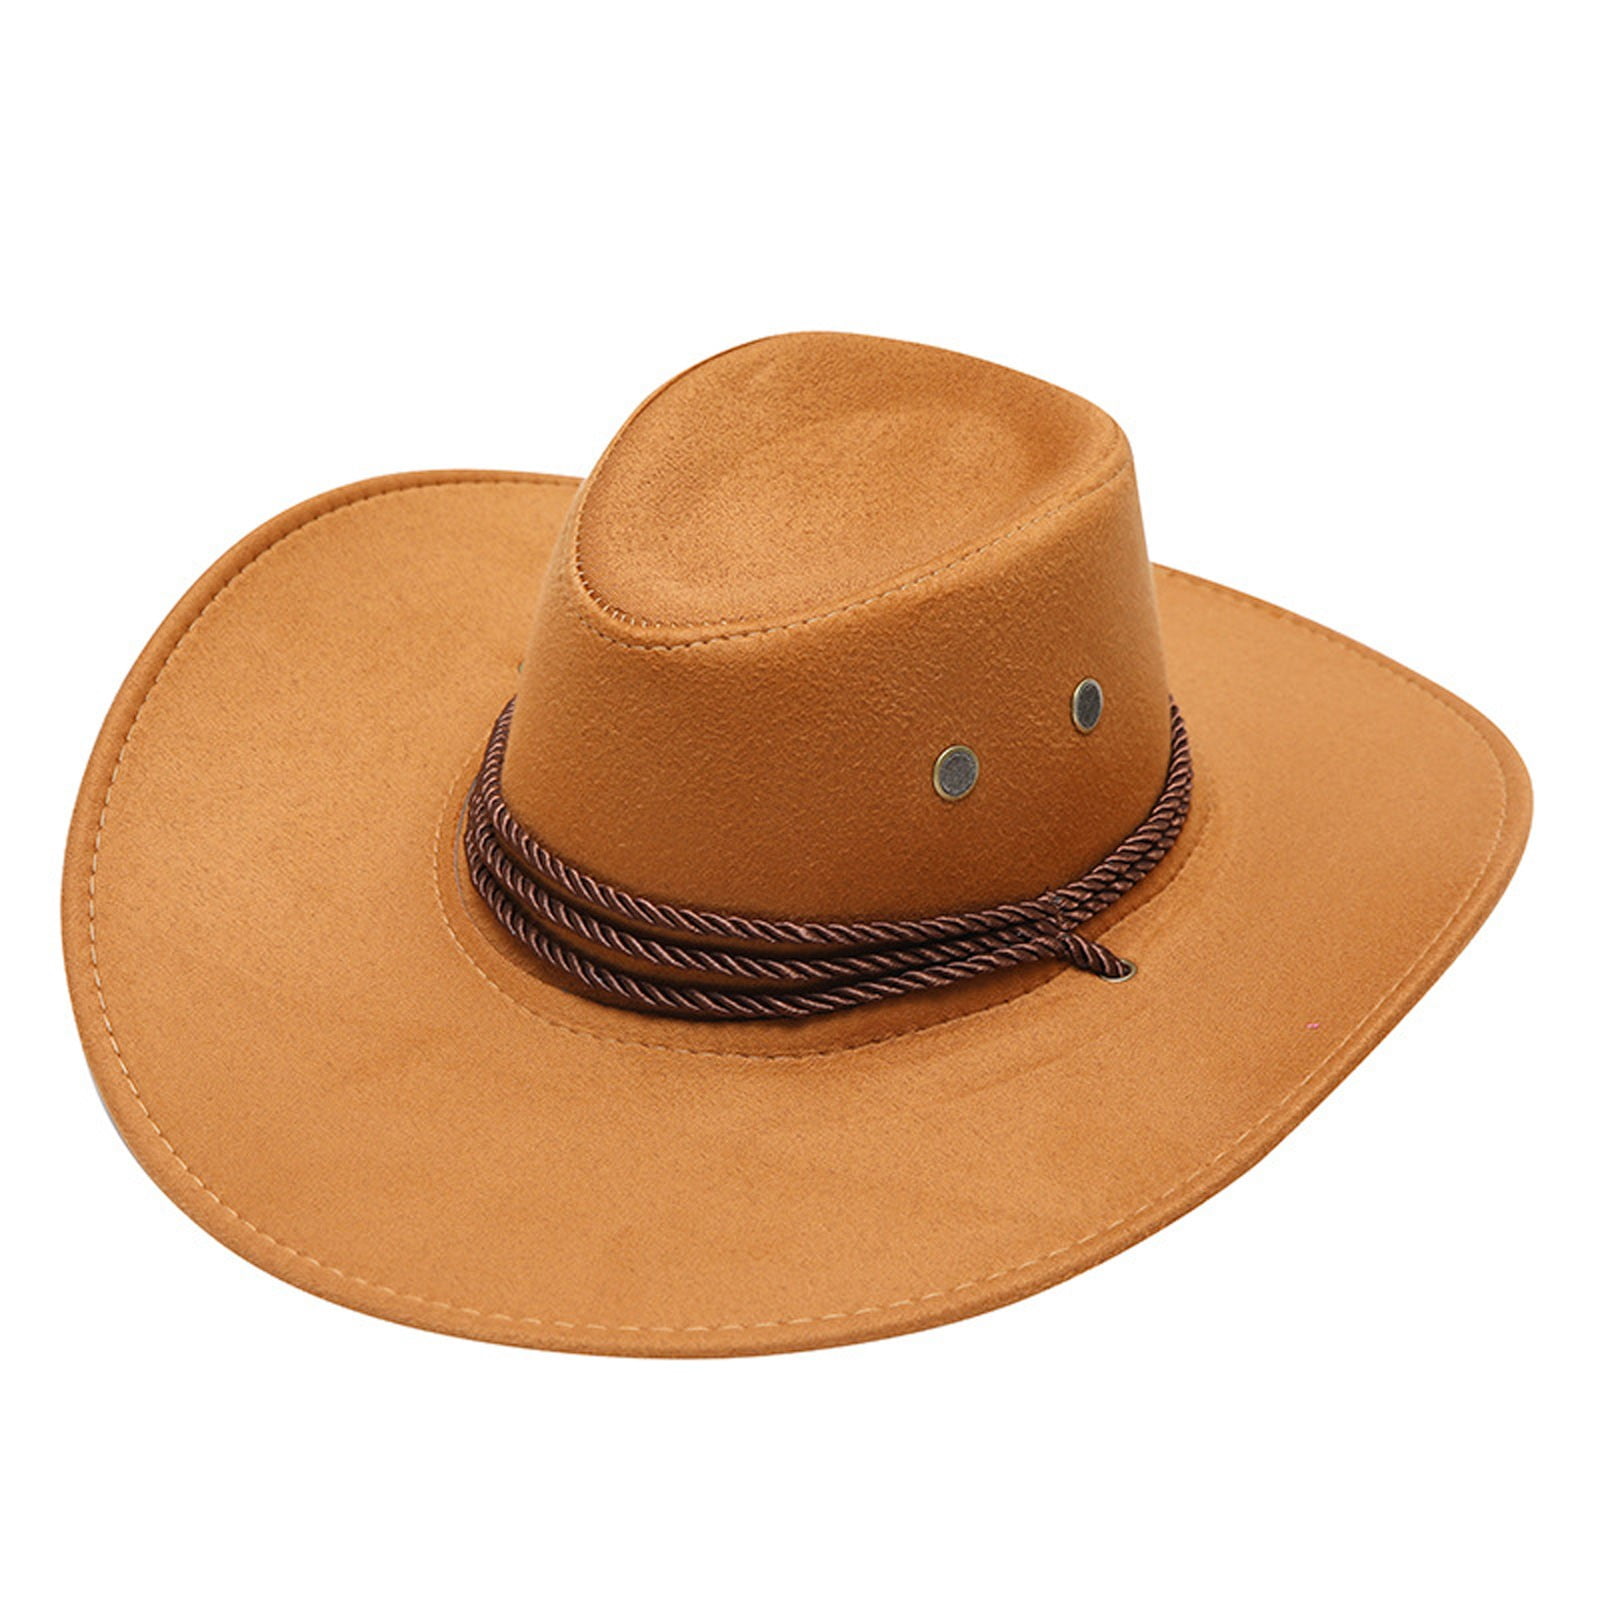 2dxuixsh Cowboy Western Hats for Men Adult Casual Solid Summer Western Fashion Cowboy Sun Hat Wide Brim Travel Sun Cap Belly Cowboy Hat 7 1/2 Gold One